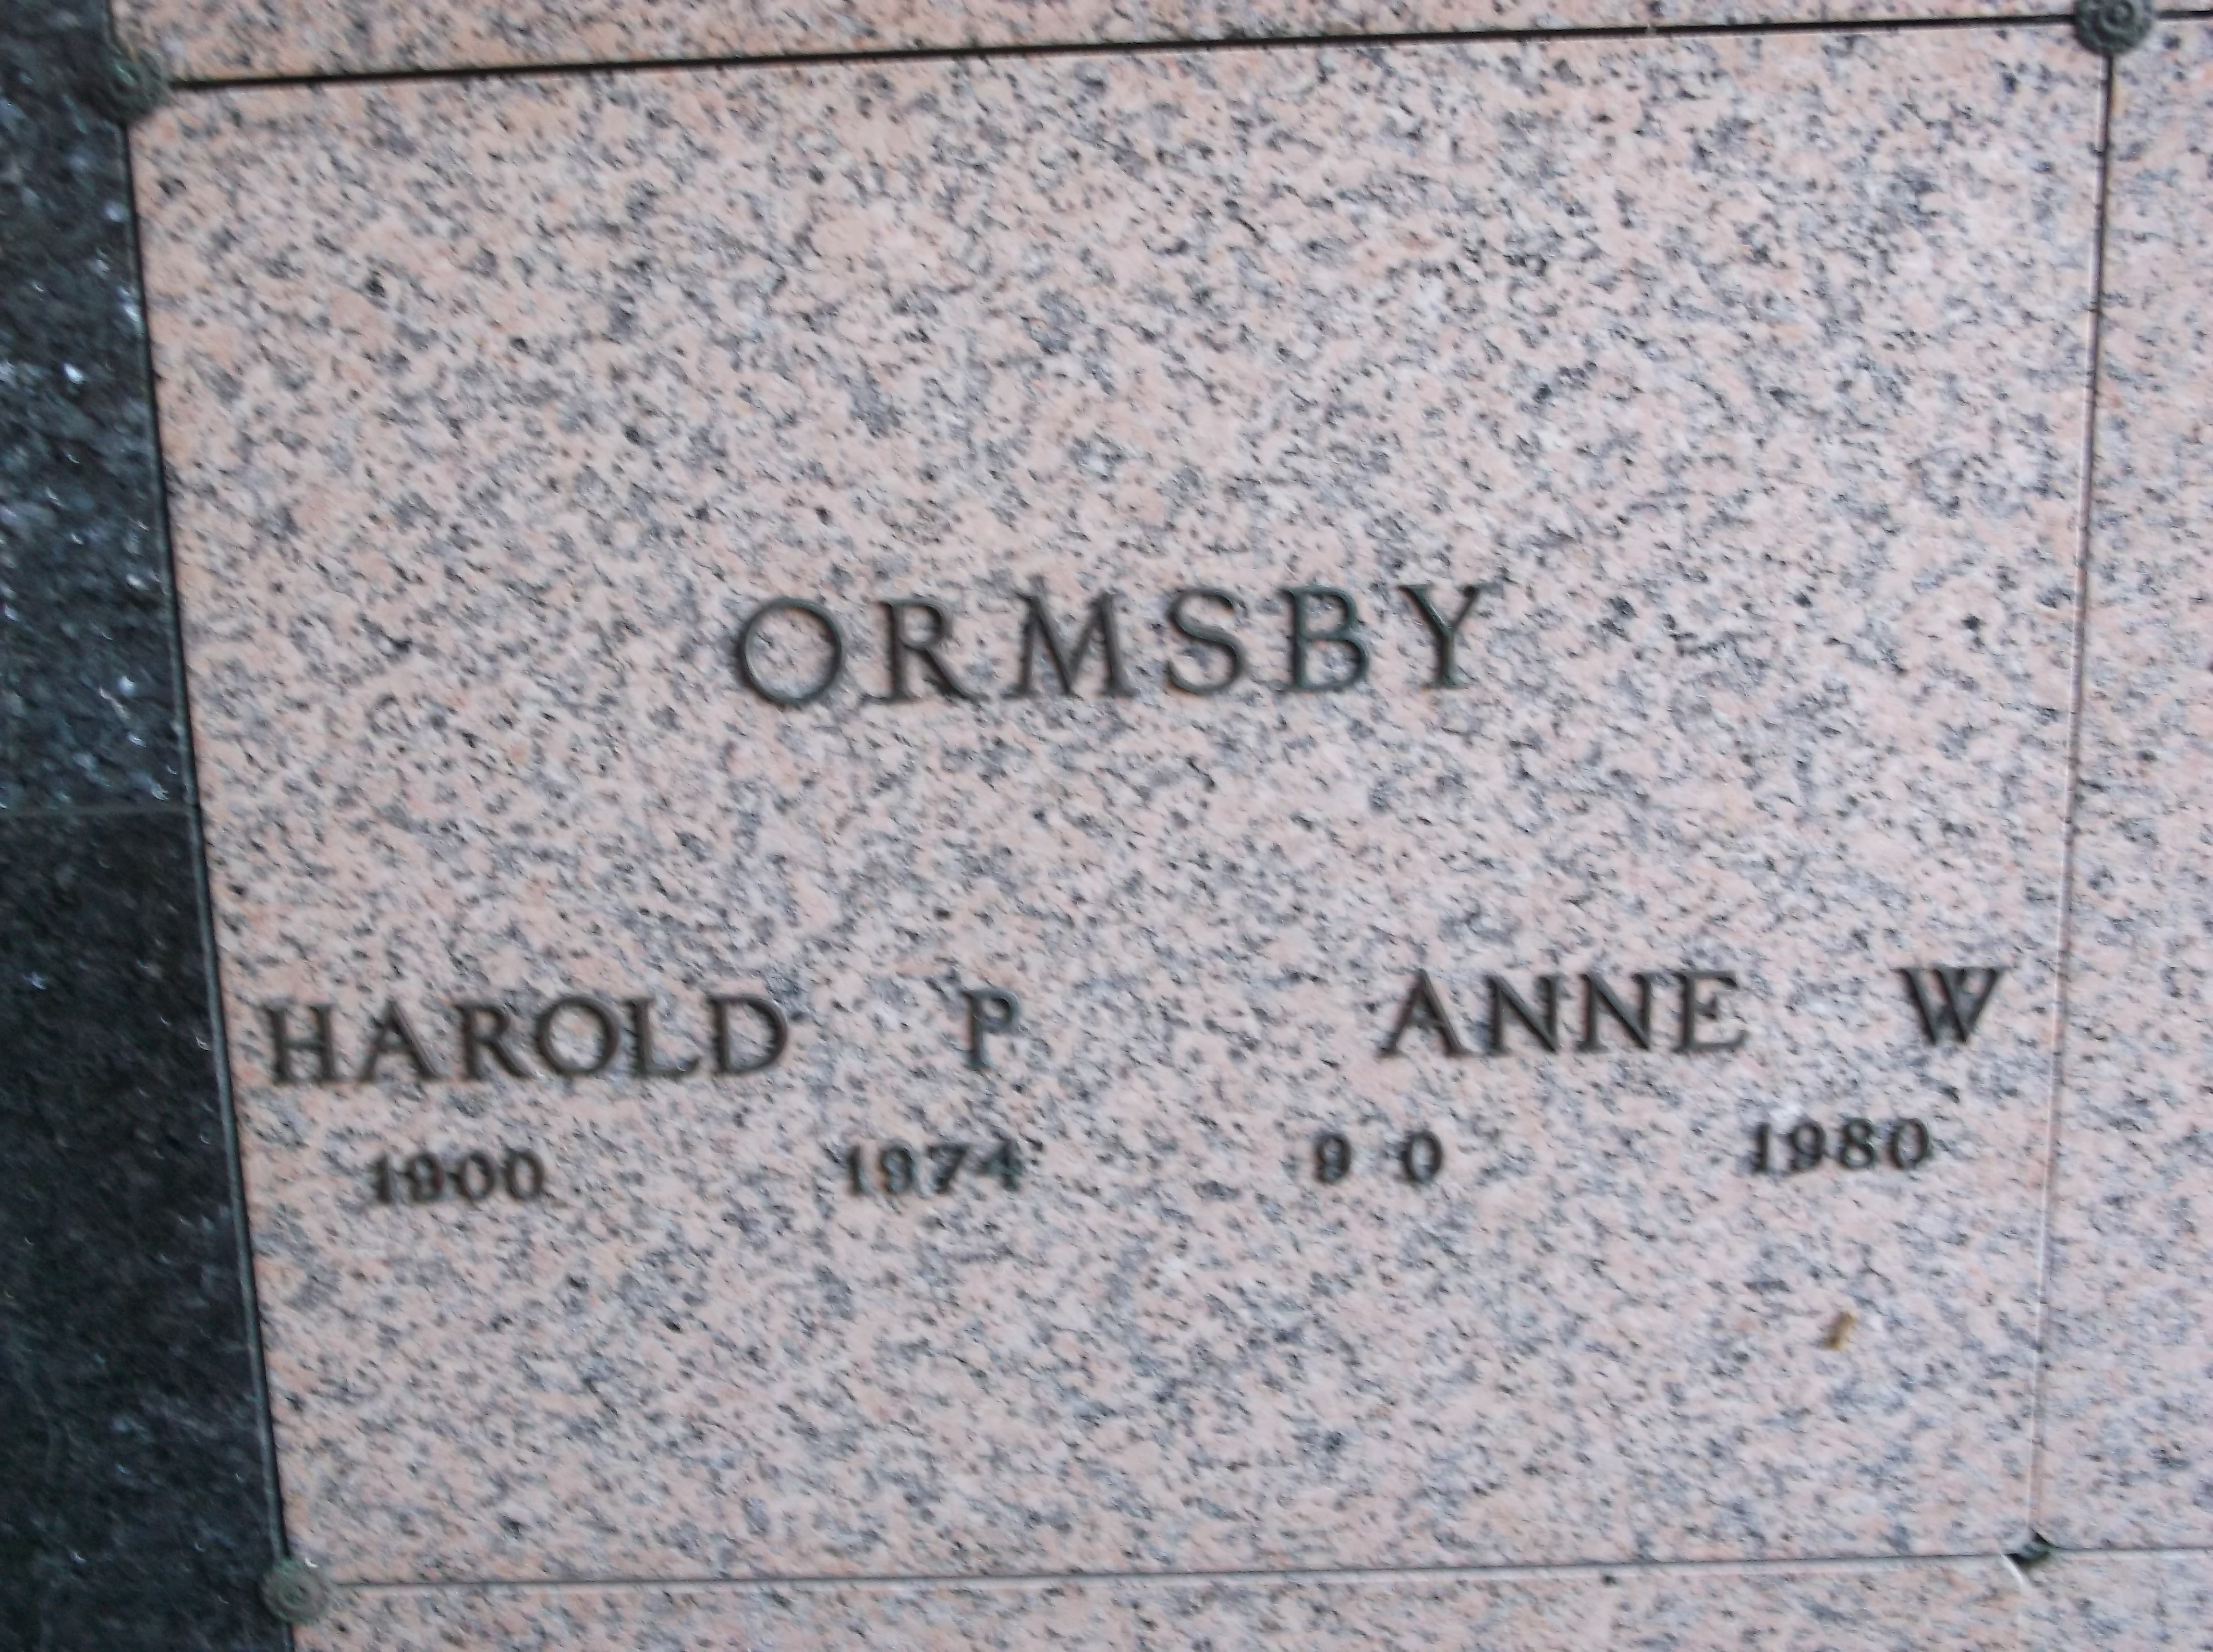 Anne W Ormsby